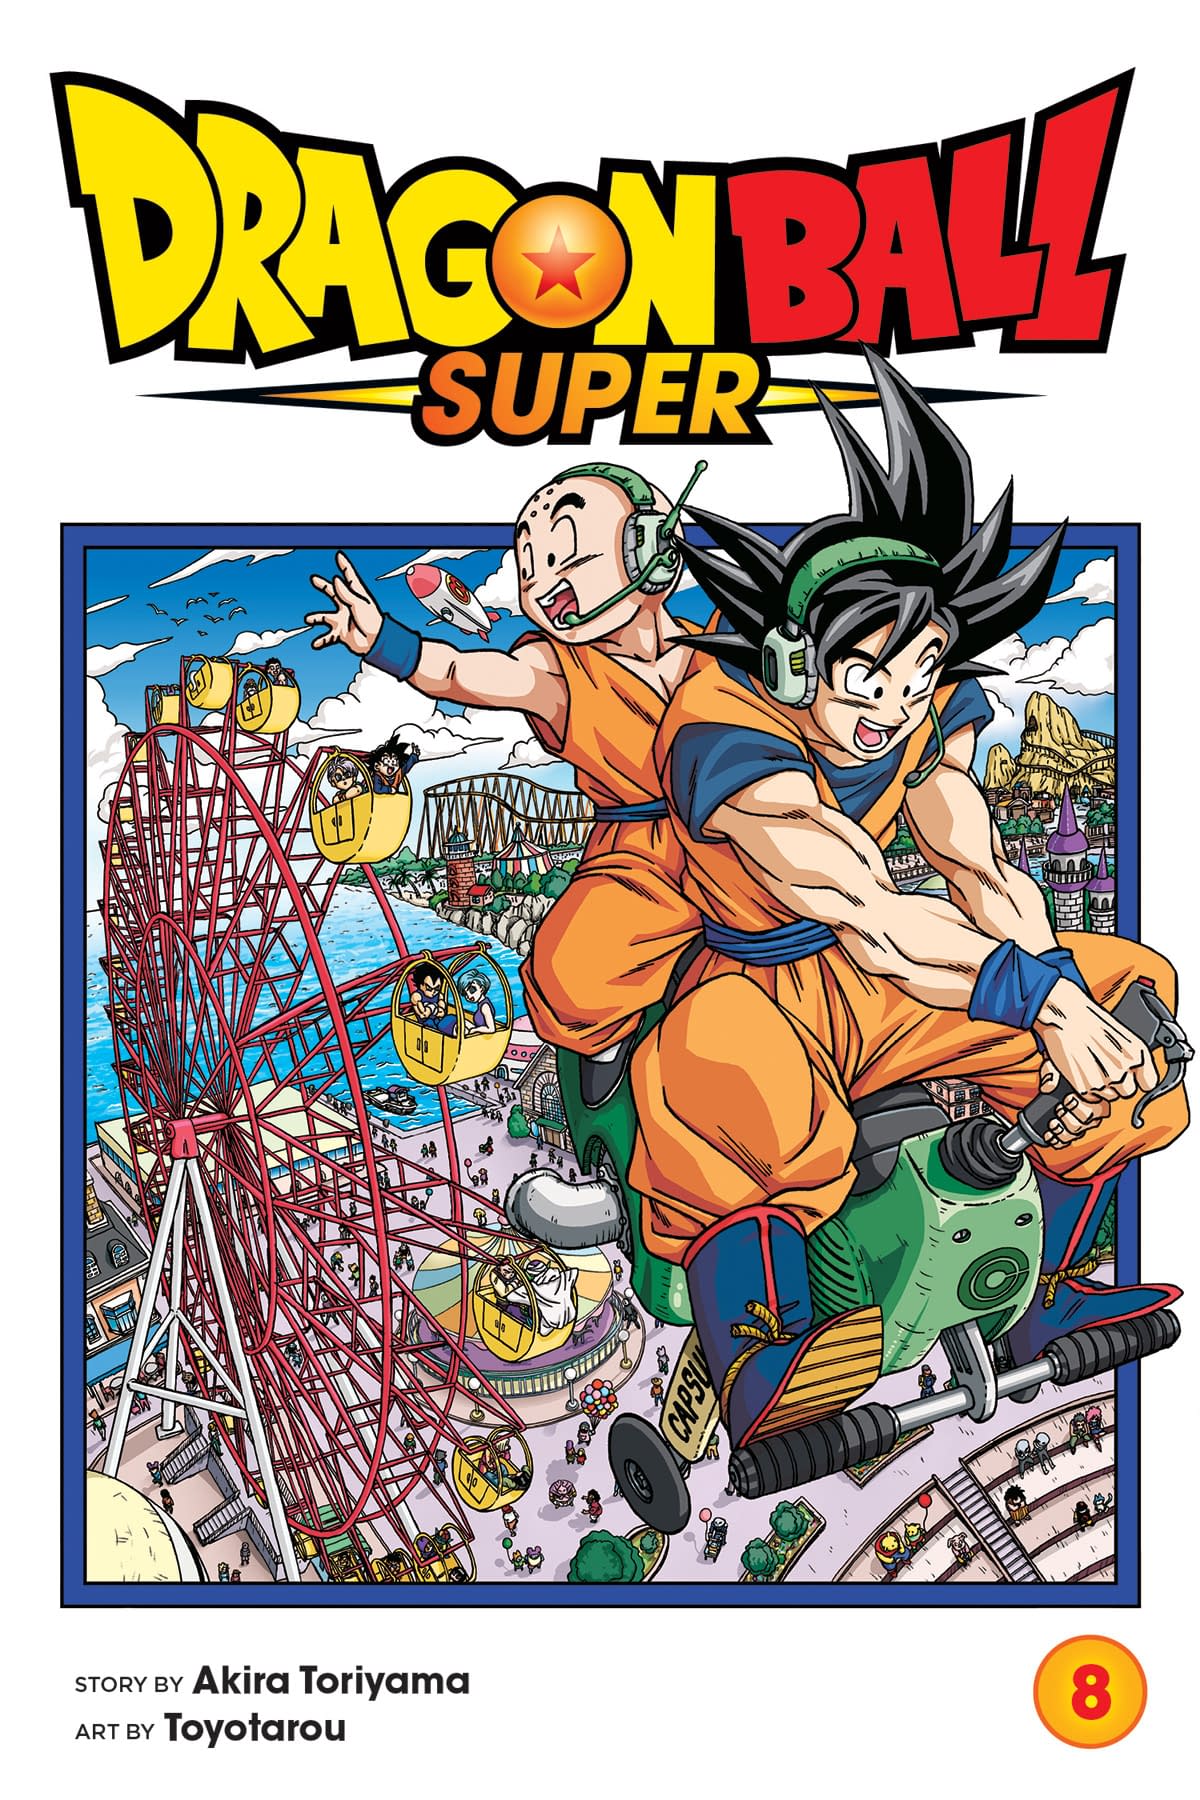 Viz Media Announces March 2020 Manga Titles